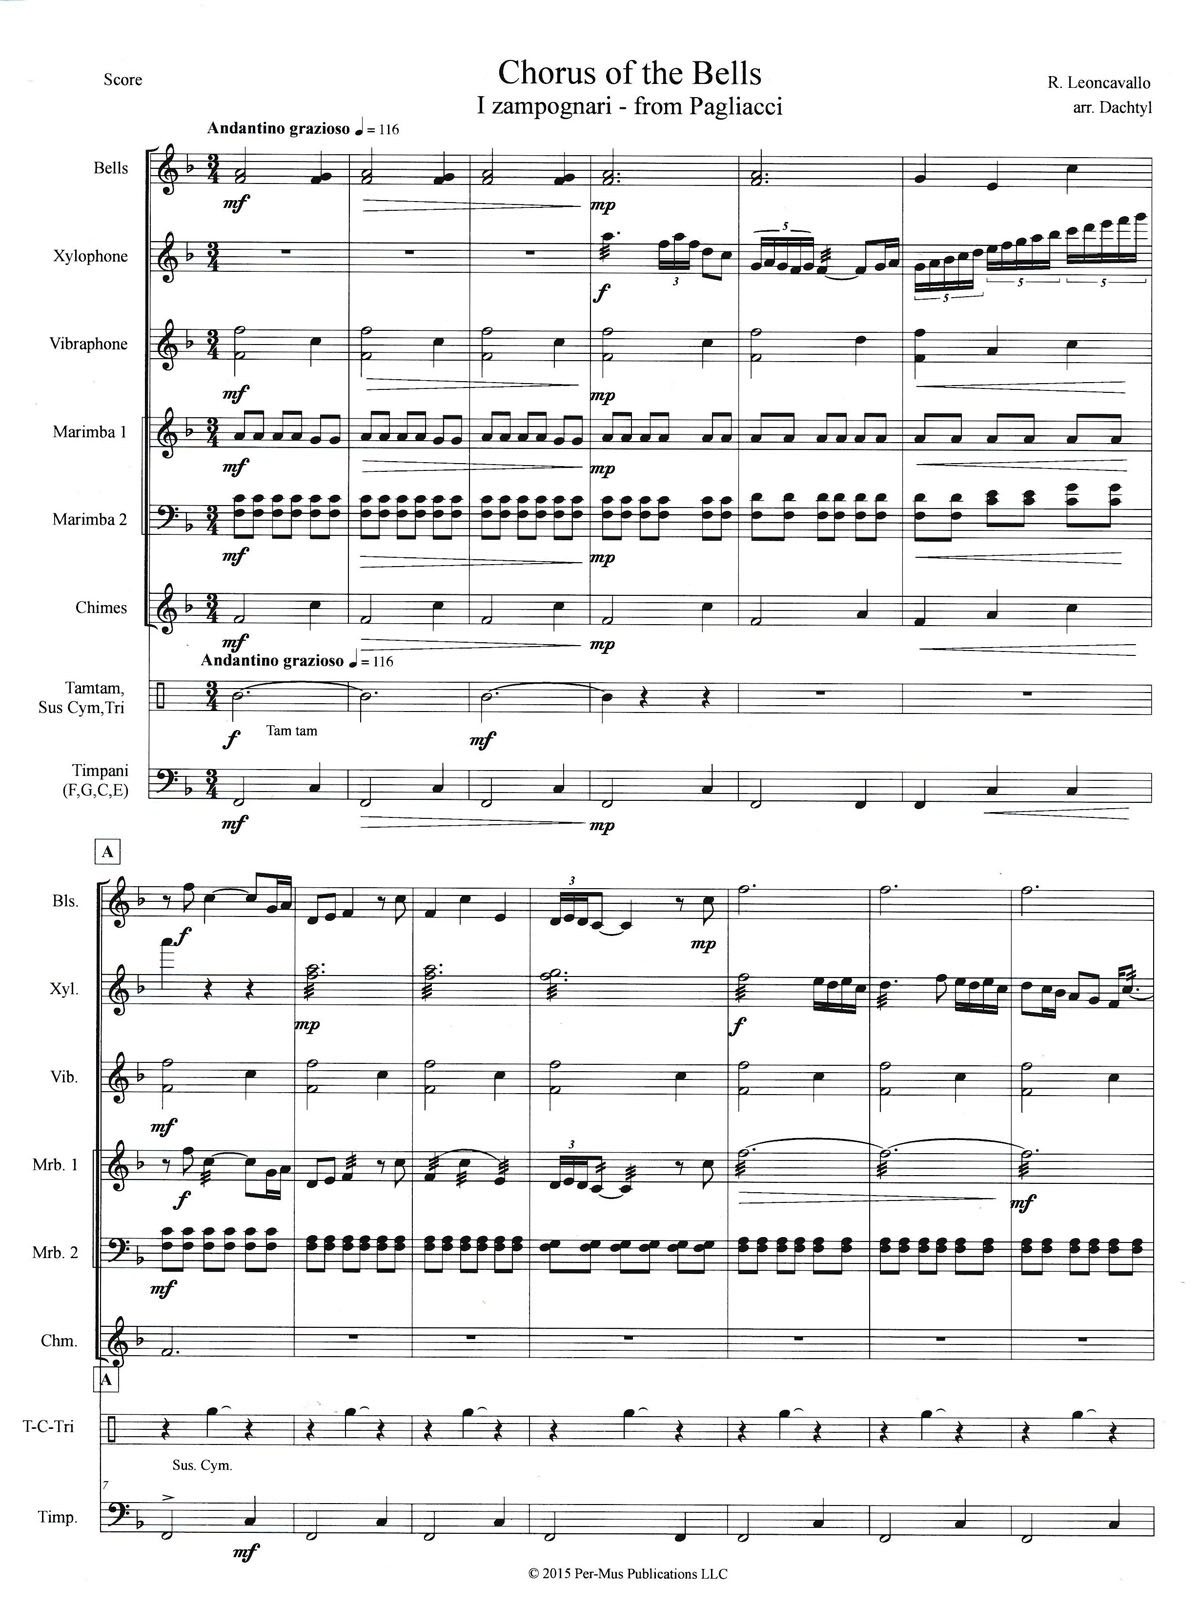 Chorus of the Bells by Leoncavallo arr. Cary Dachtyl